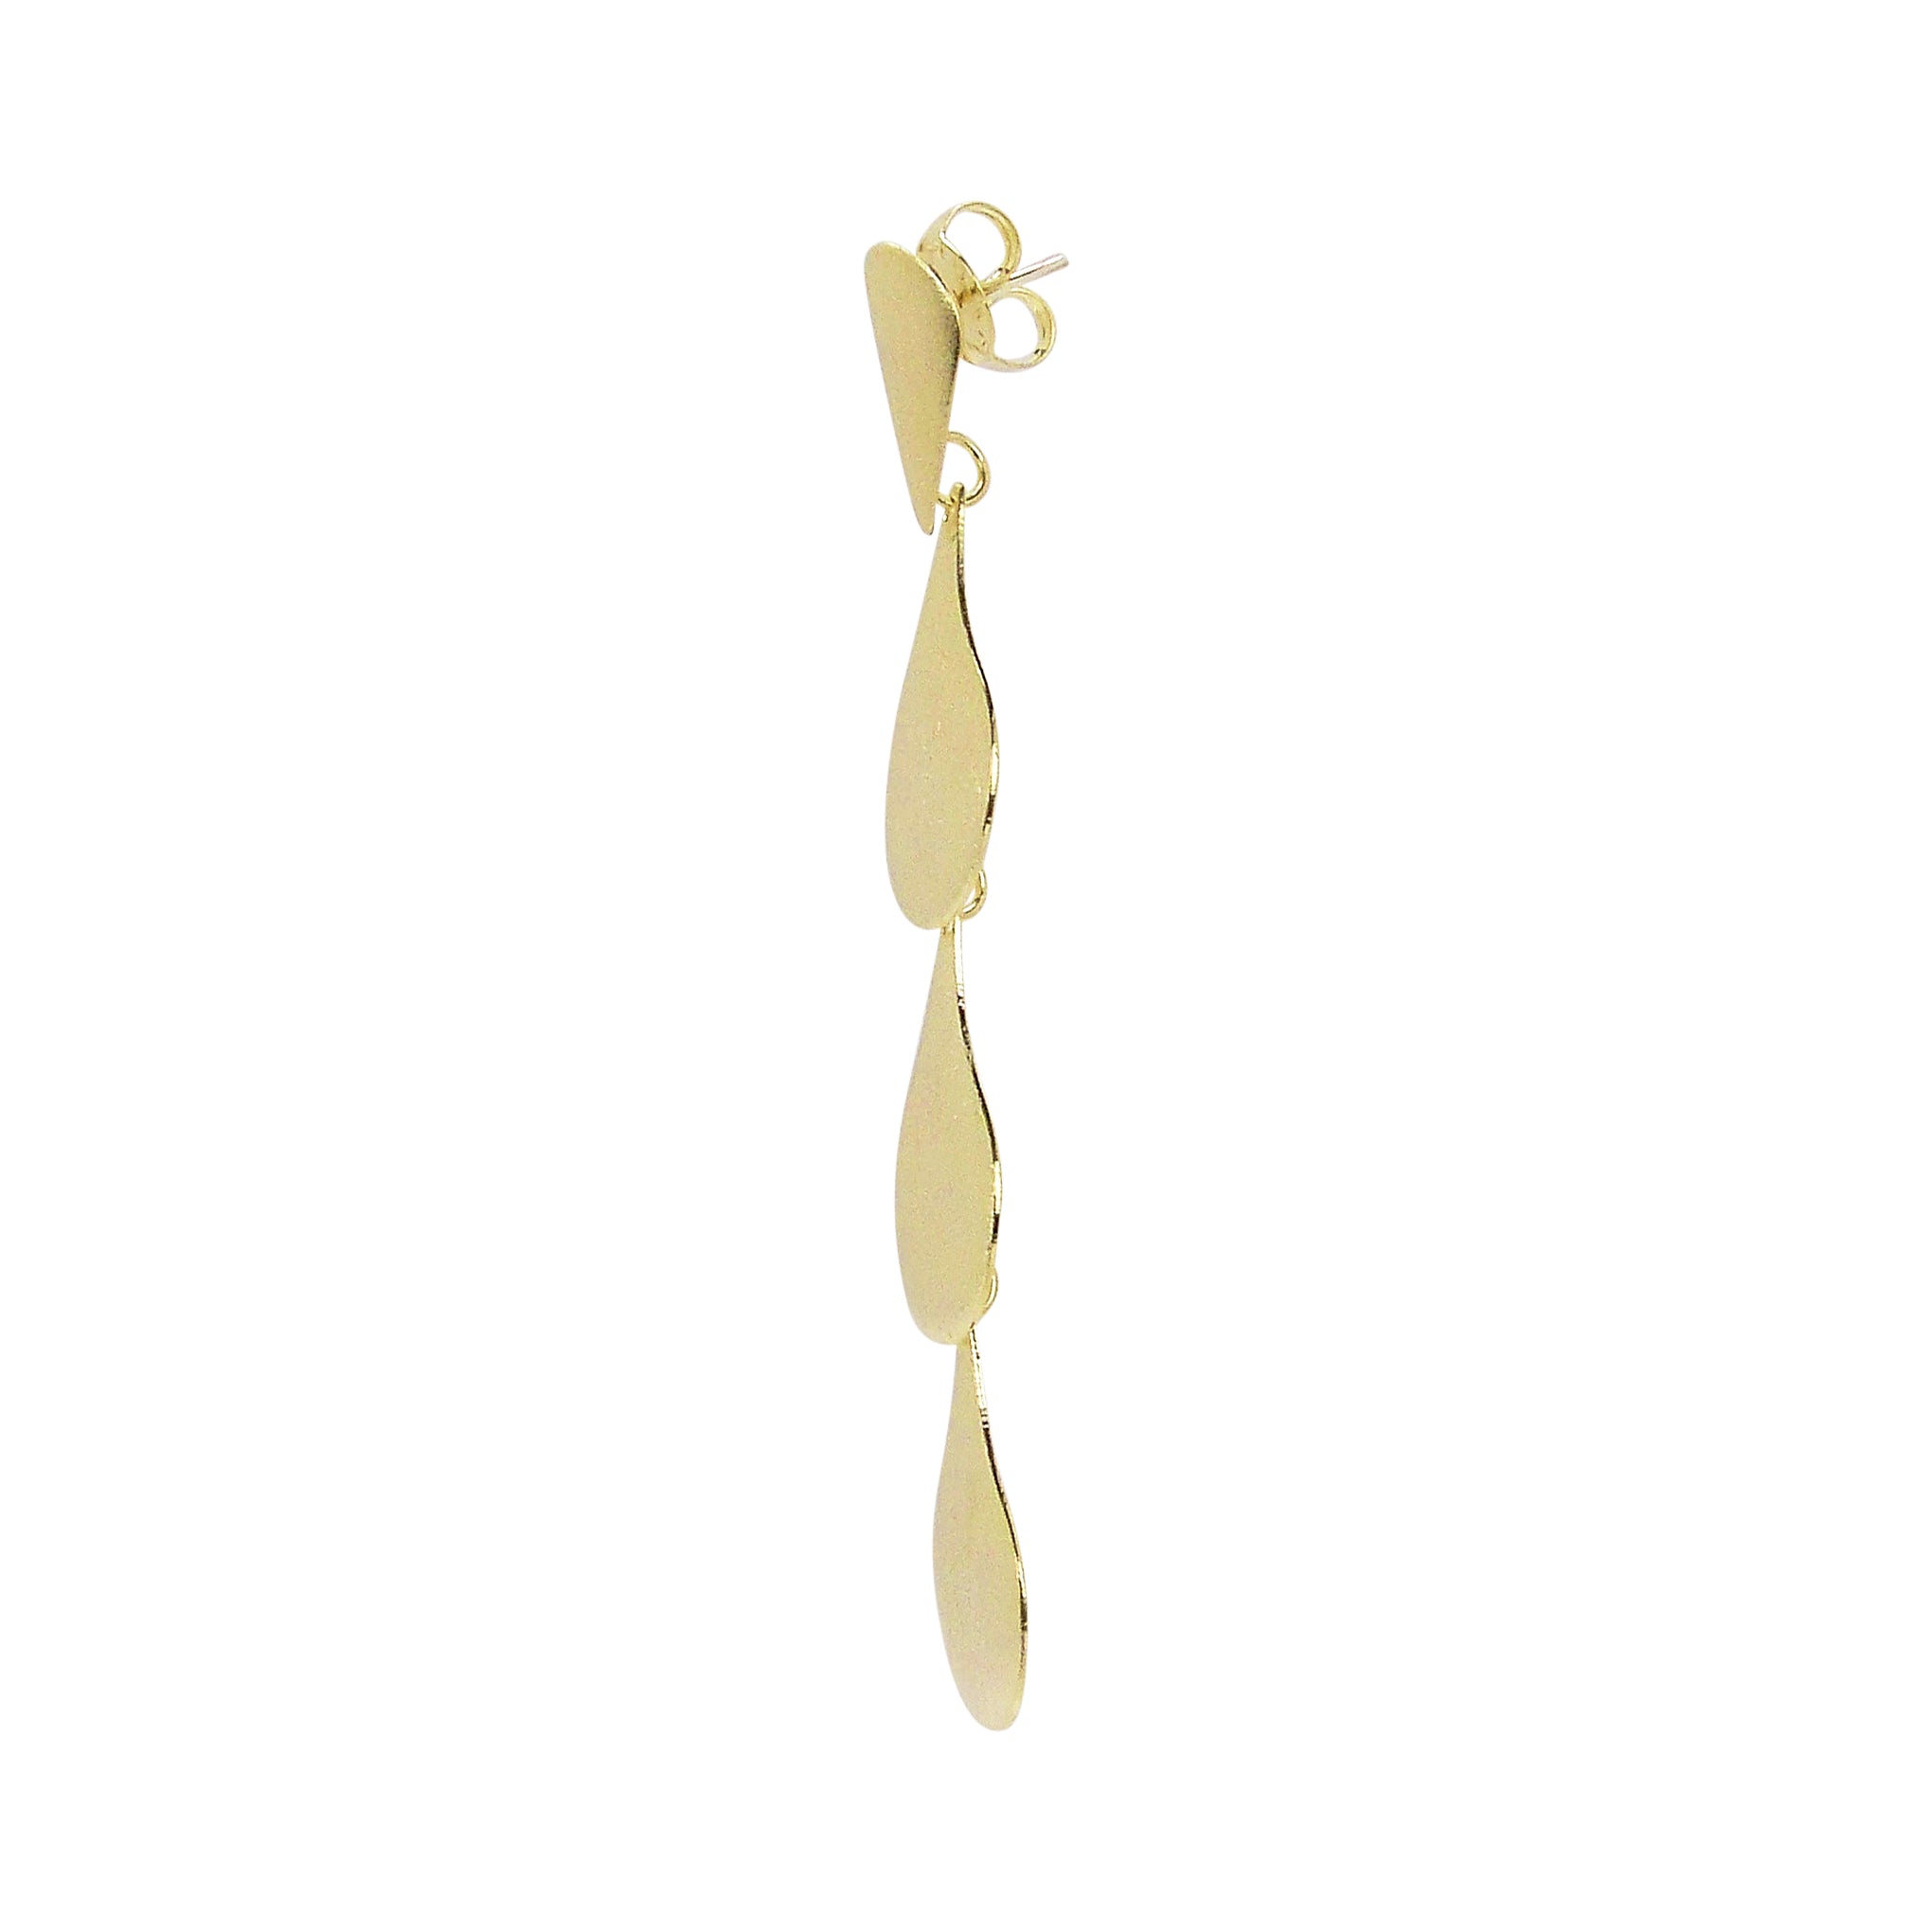 45 degree angle image of Sheila Fajl Harper Dangle Teardrop Earrings in Brushed Gold Plated